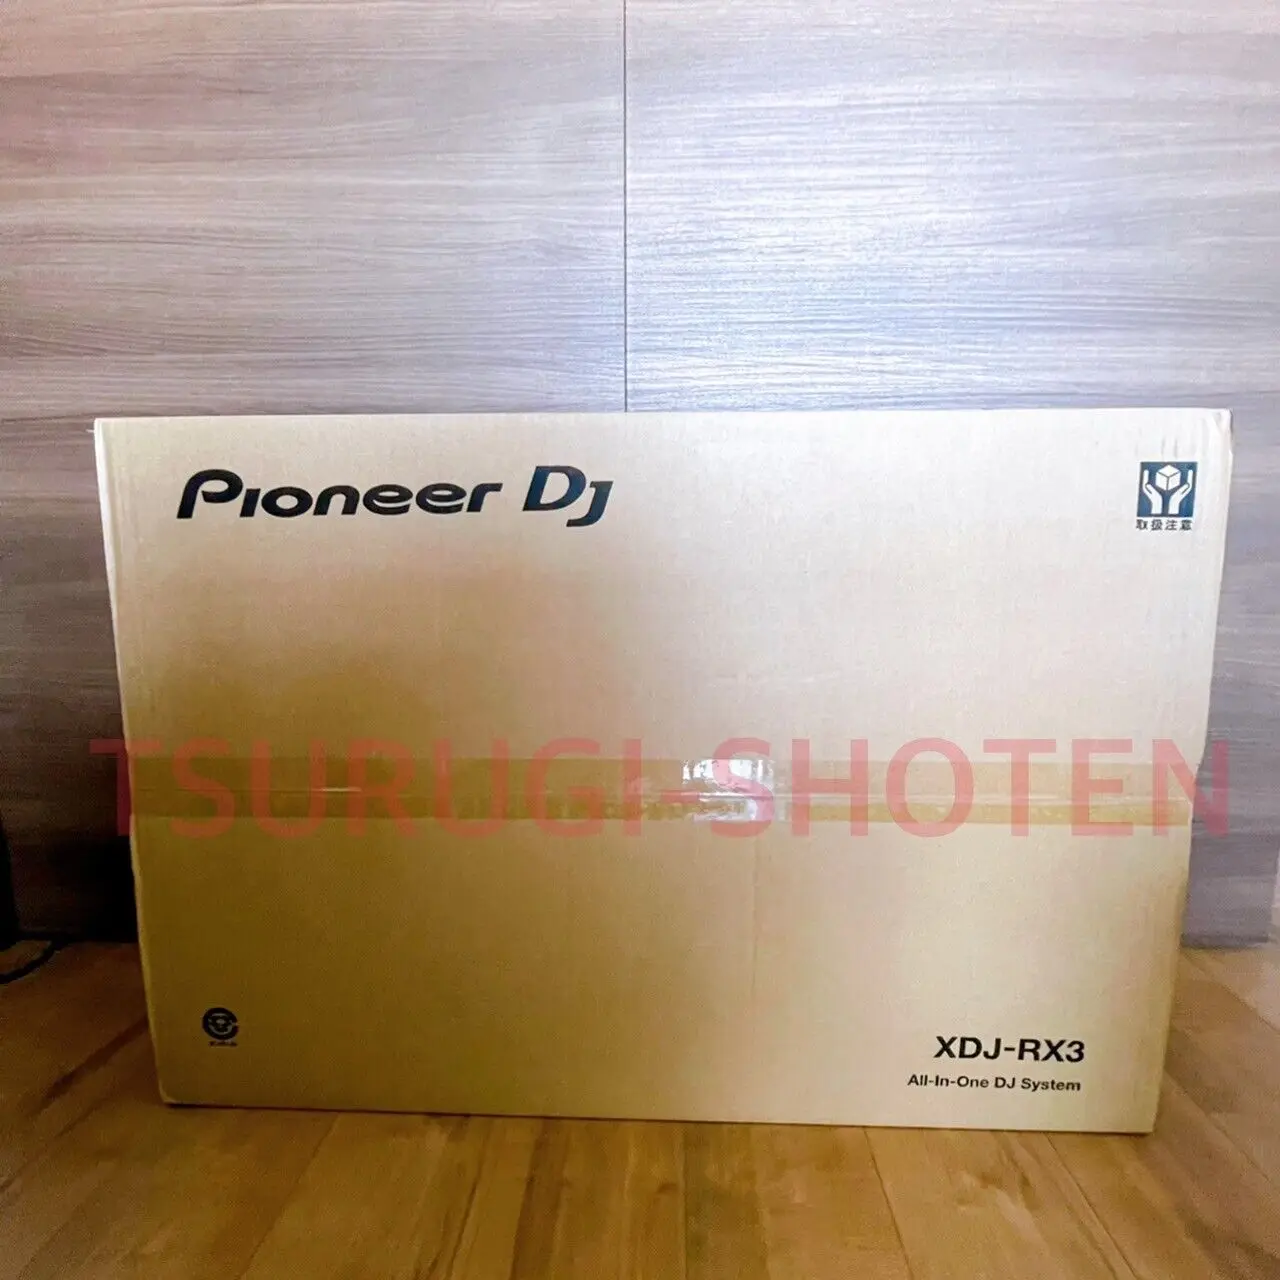 

Pioneer DJ XDJ-RX3 AC100V - 240V Black 2ch All-in-One DJ System